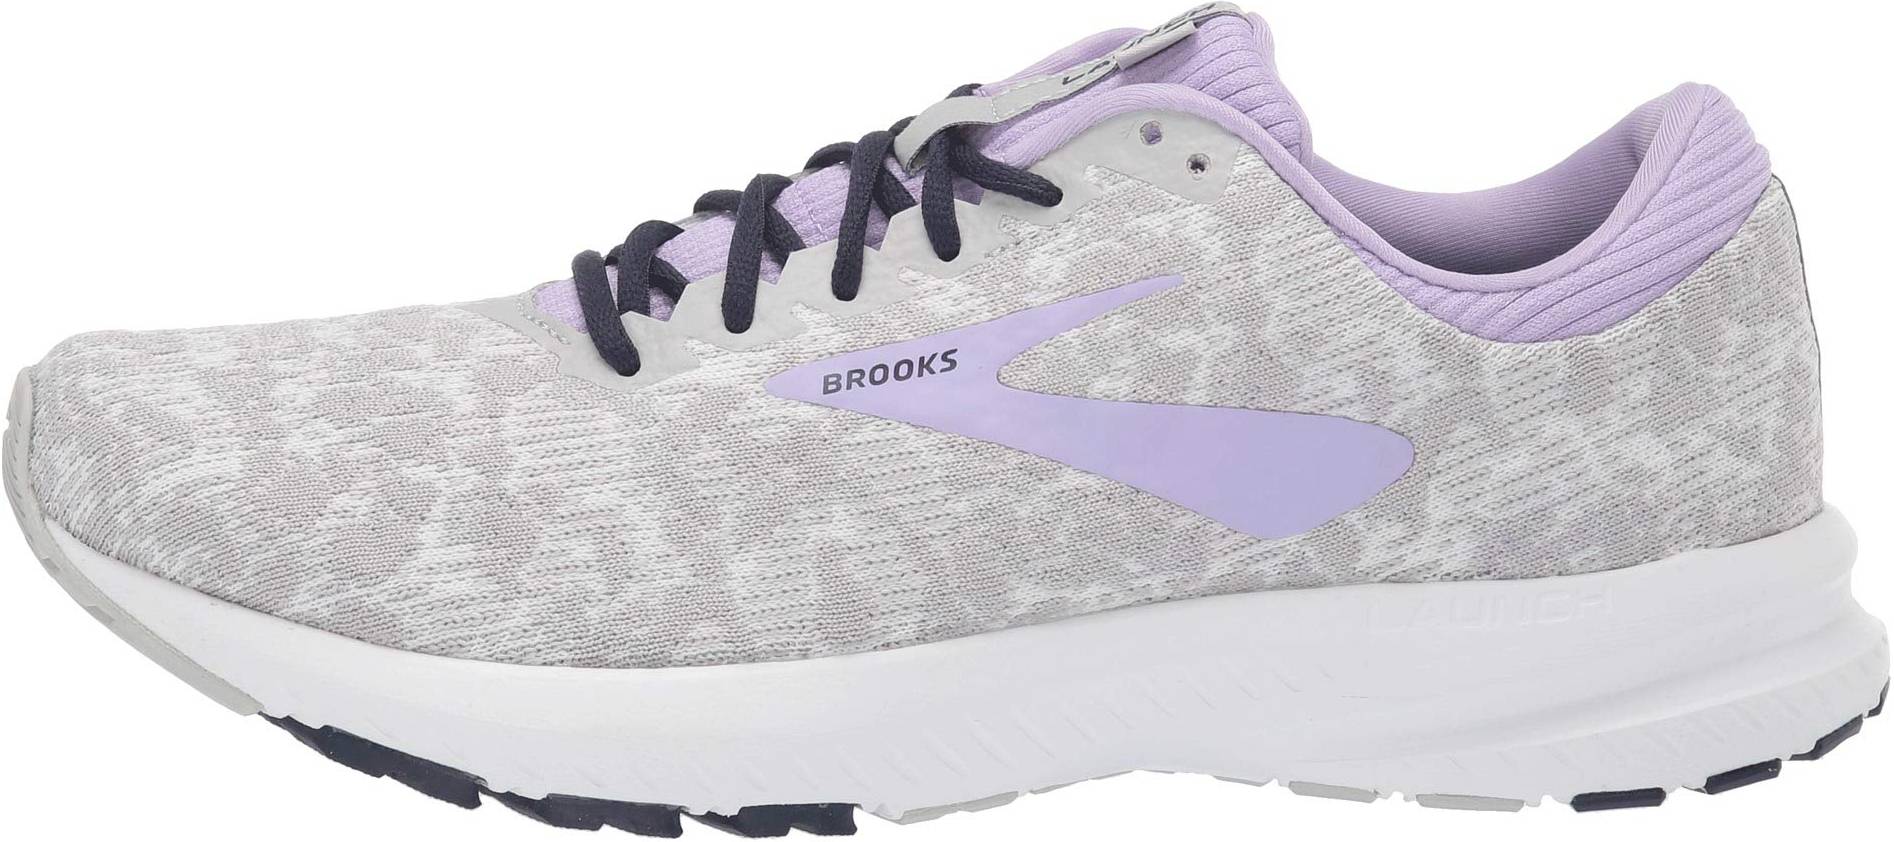 brooks womens narrow running shoes